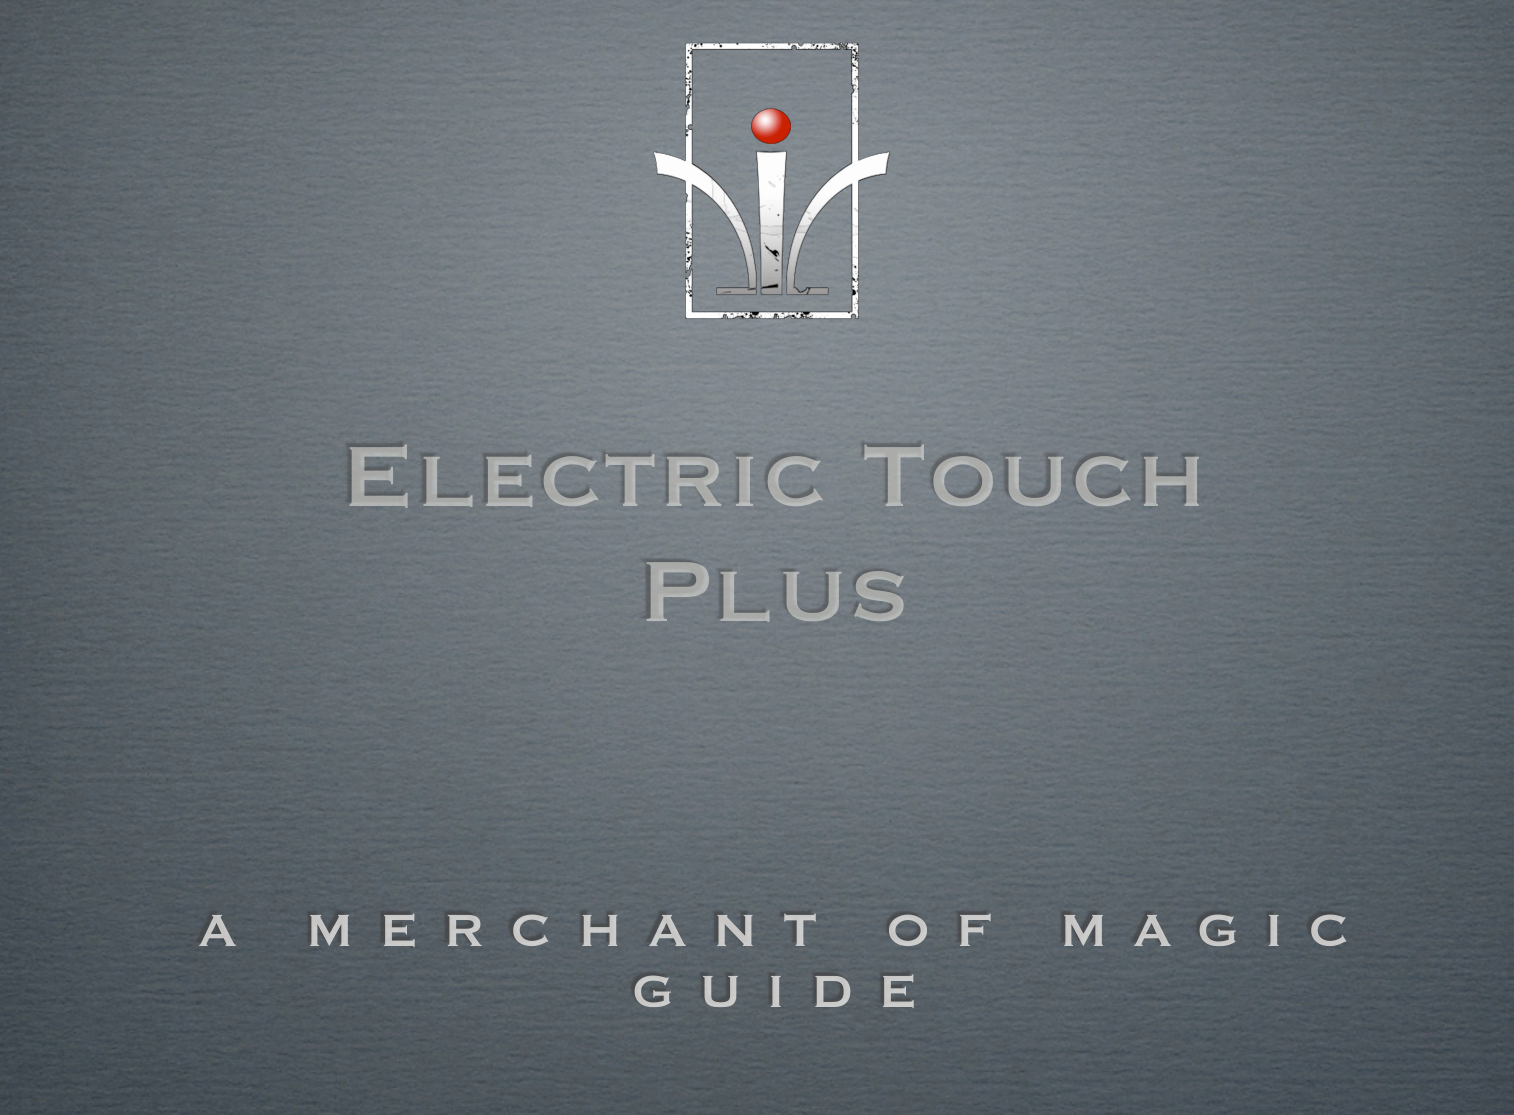 Yigal Mesika - Electric Touch plus bonus book by Merchant of Magic